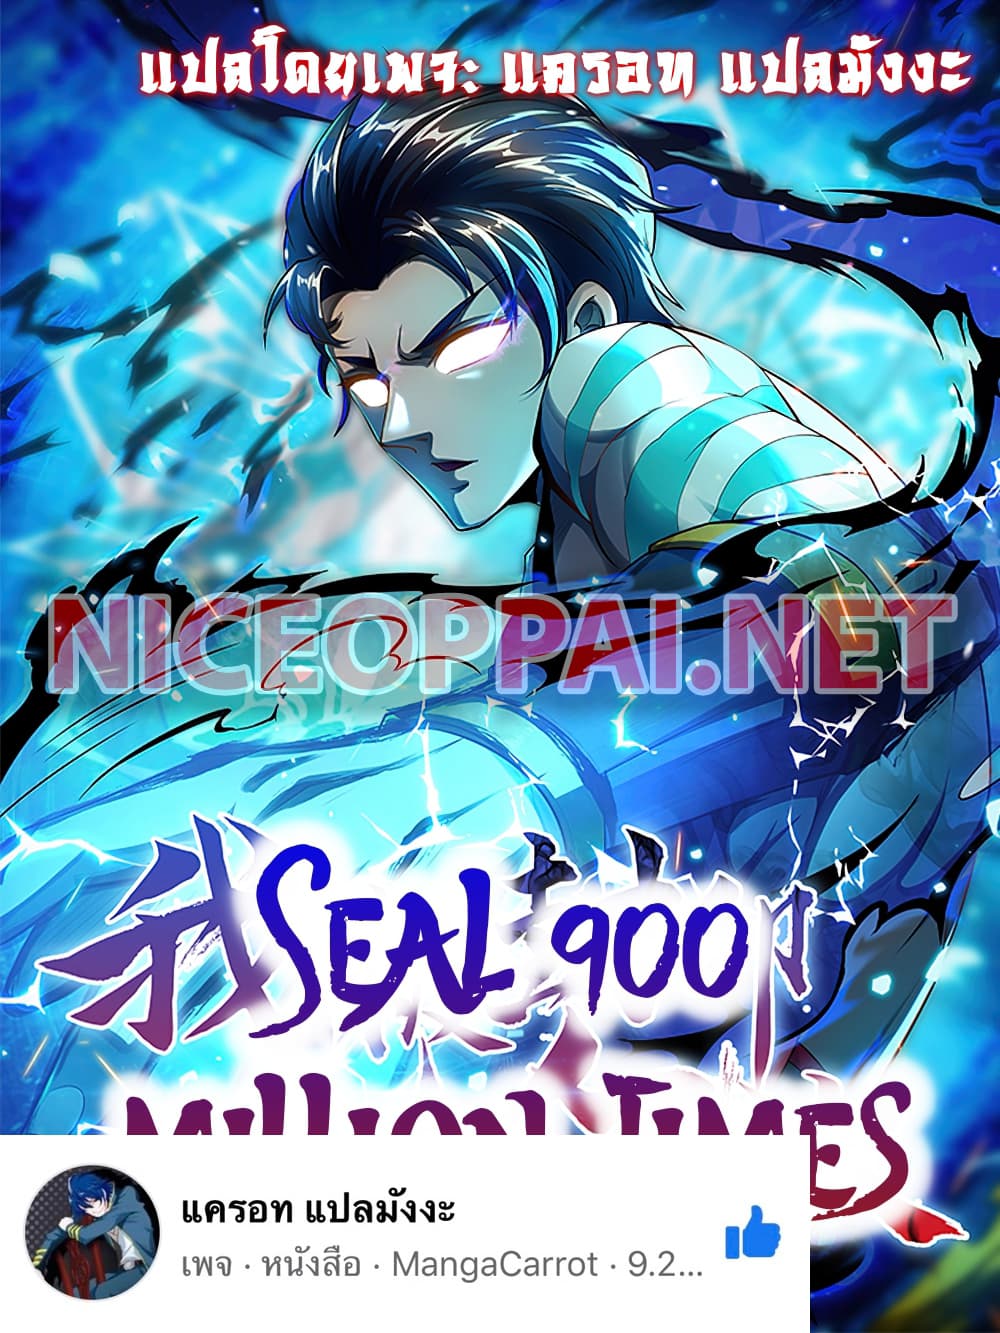 Seal900MillionTimes ตอนที่3 (1)